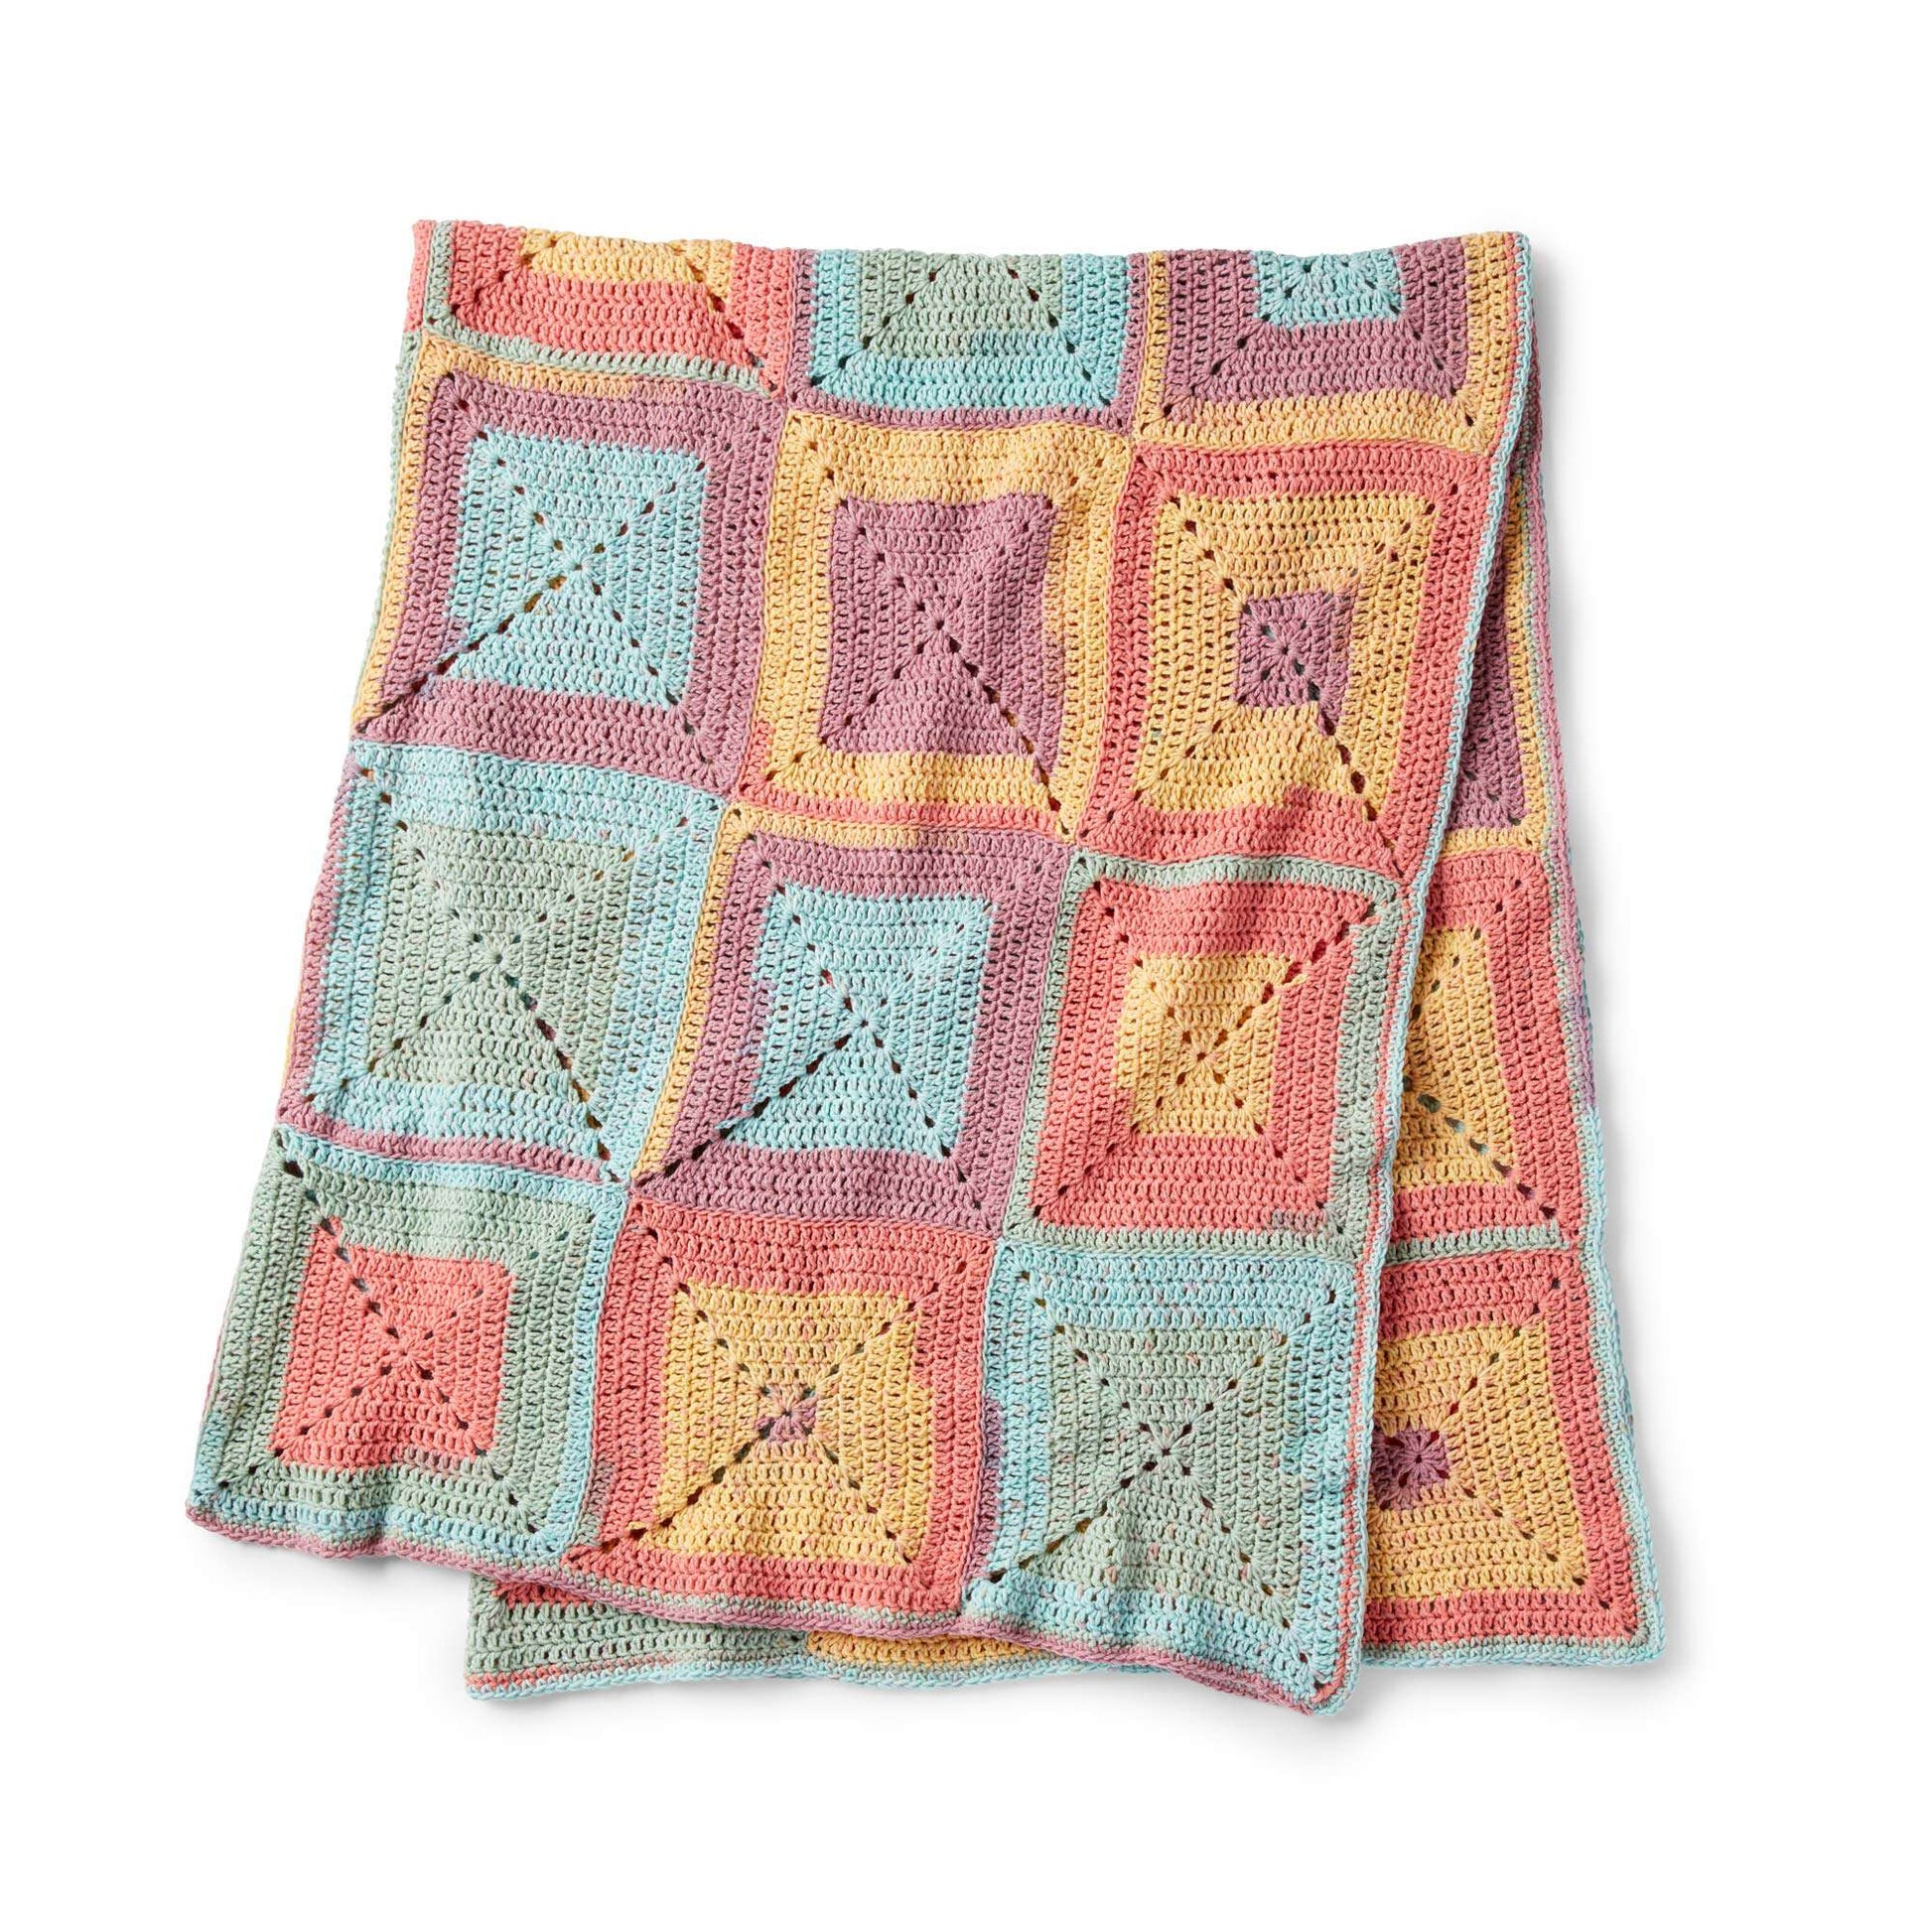 Free Caron Colorful Crochet Granny Squares Blanket Pattern